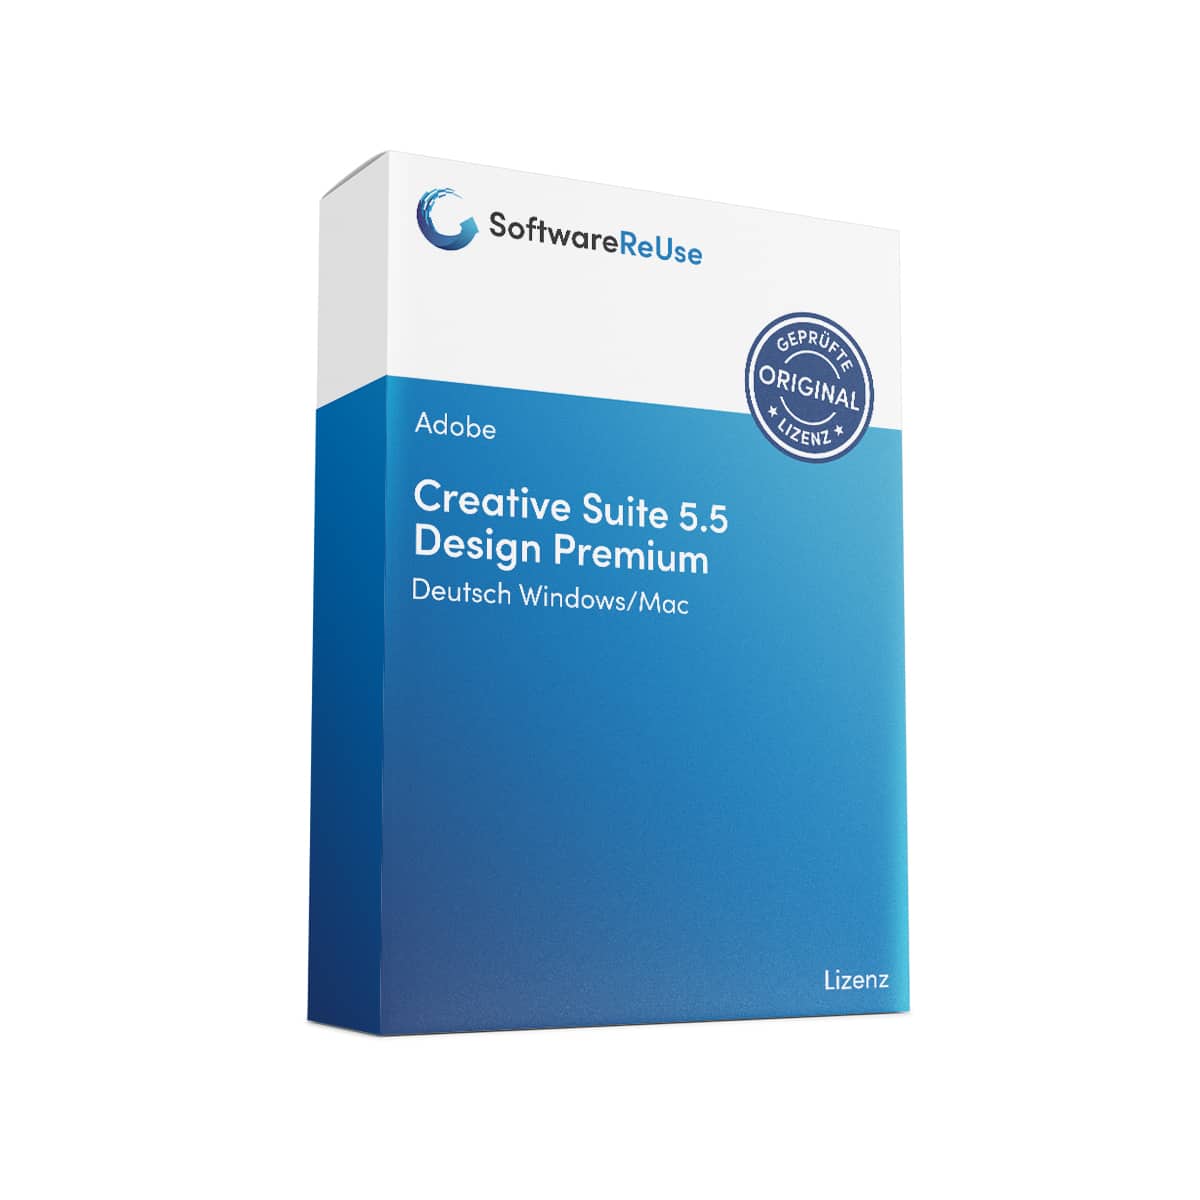 Creative Suite 5 5 Design Premium DEKihFoc7EeeMFb